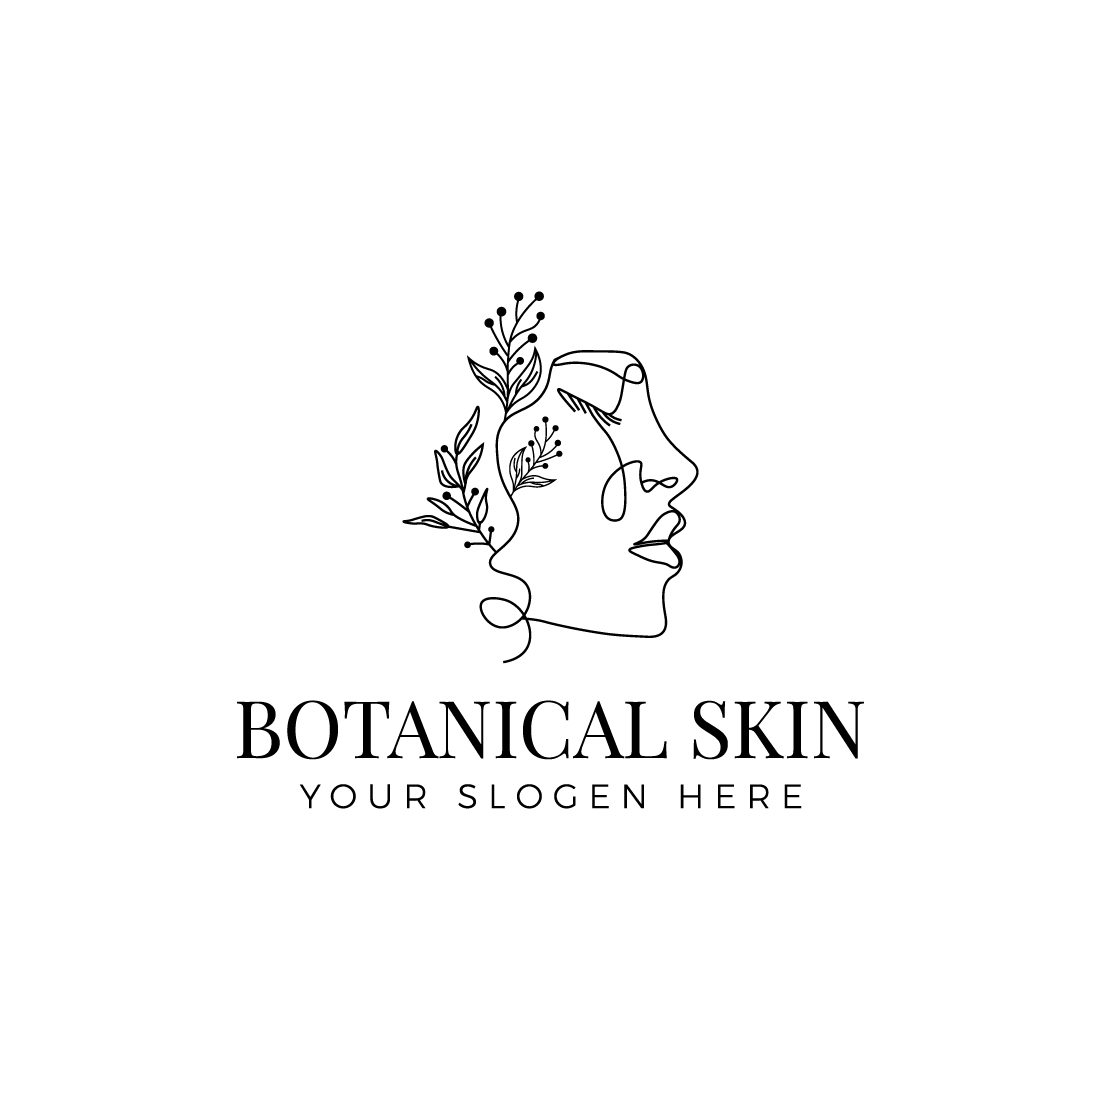 Botanical skin care logo | Hand drawn Line art logo preview image.